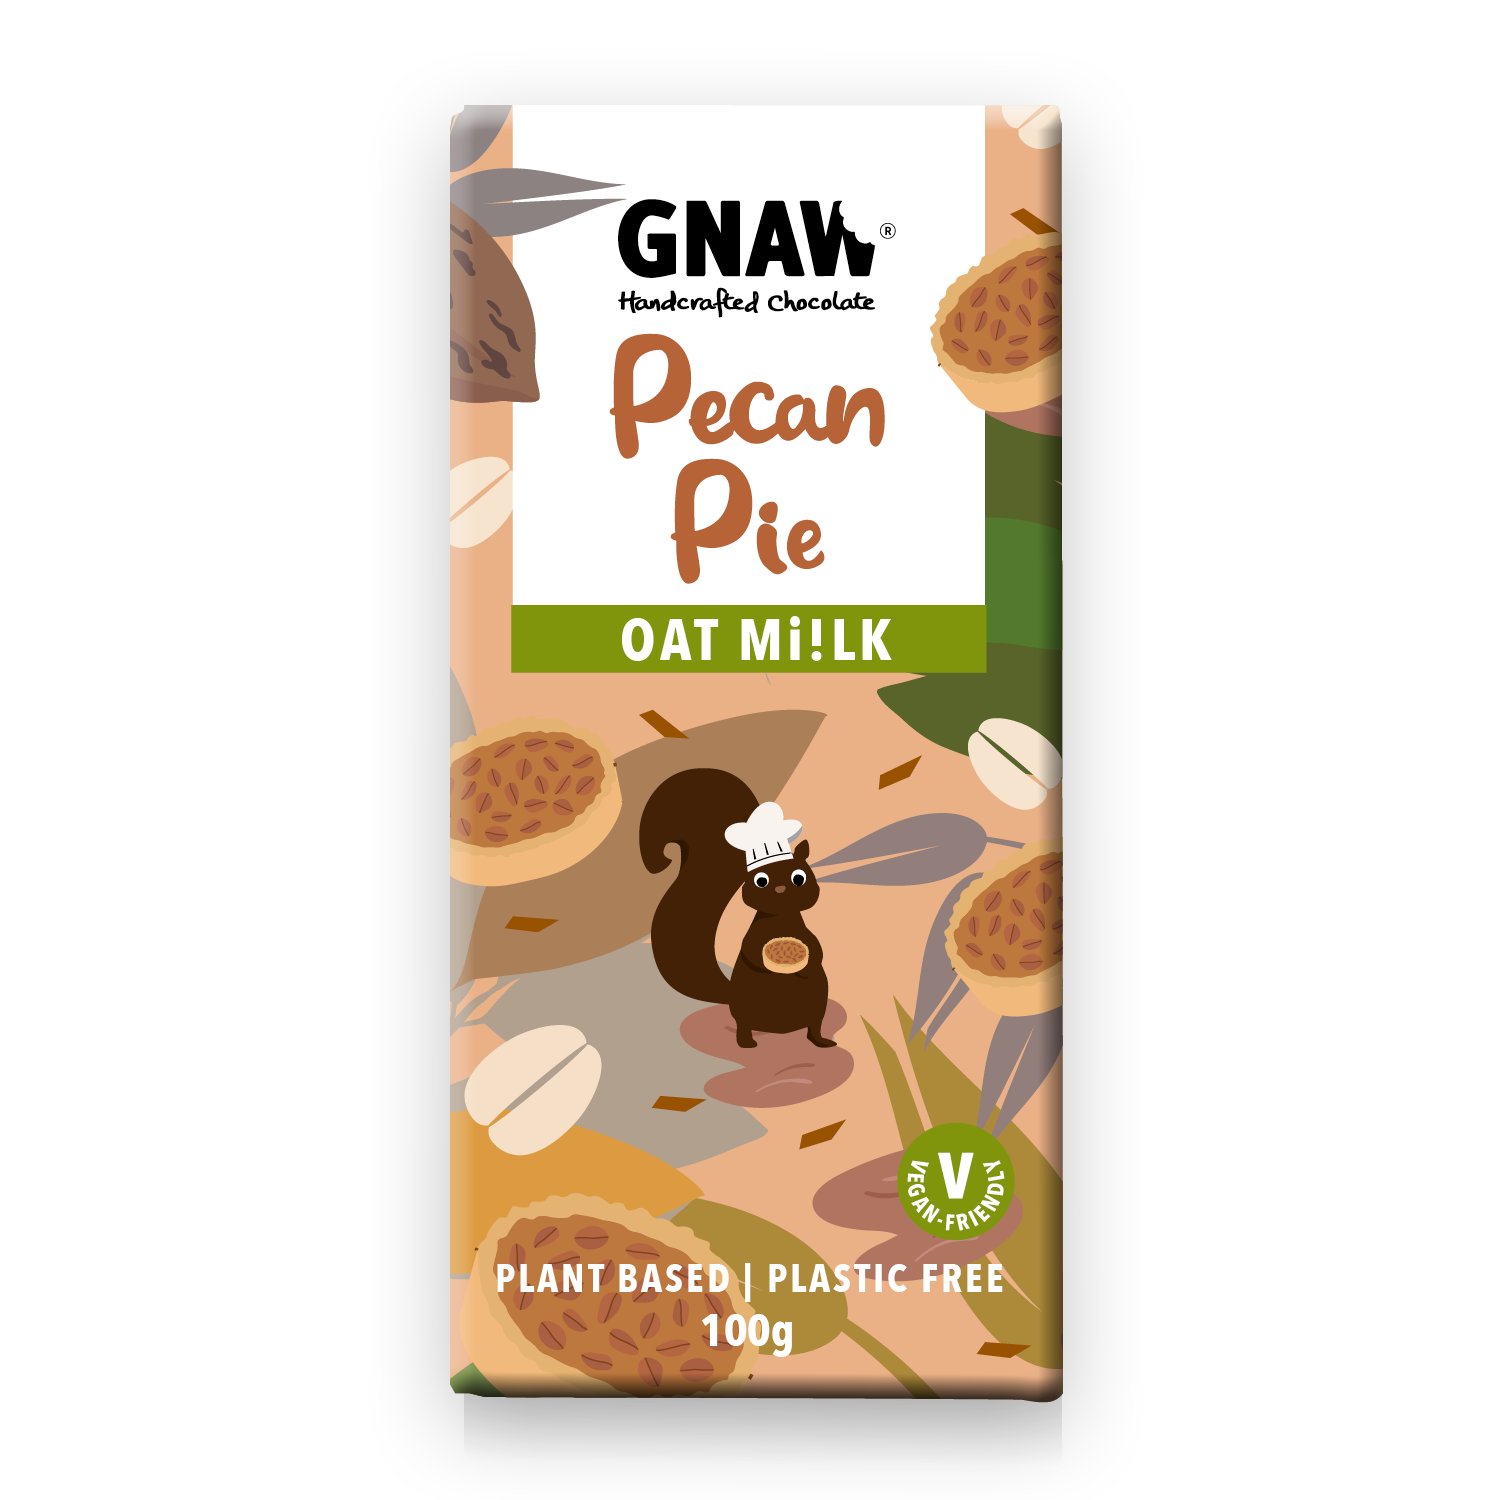 Gnaw Pecan Pie Oat M!lk Chocolate Bar (100g)